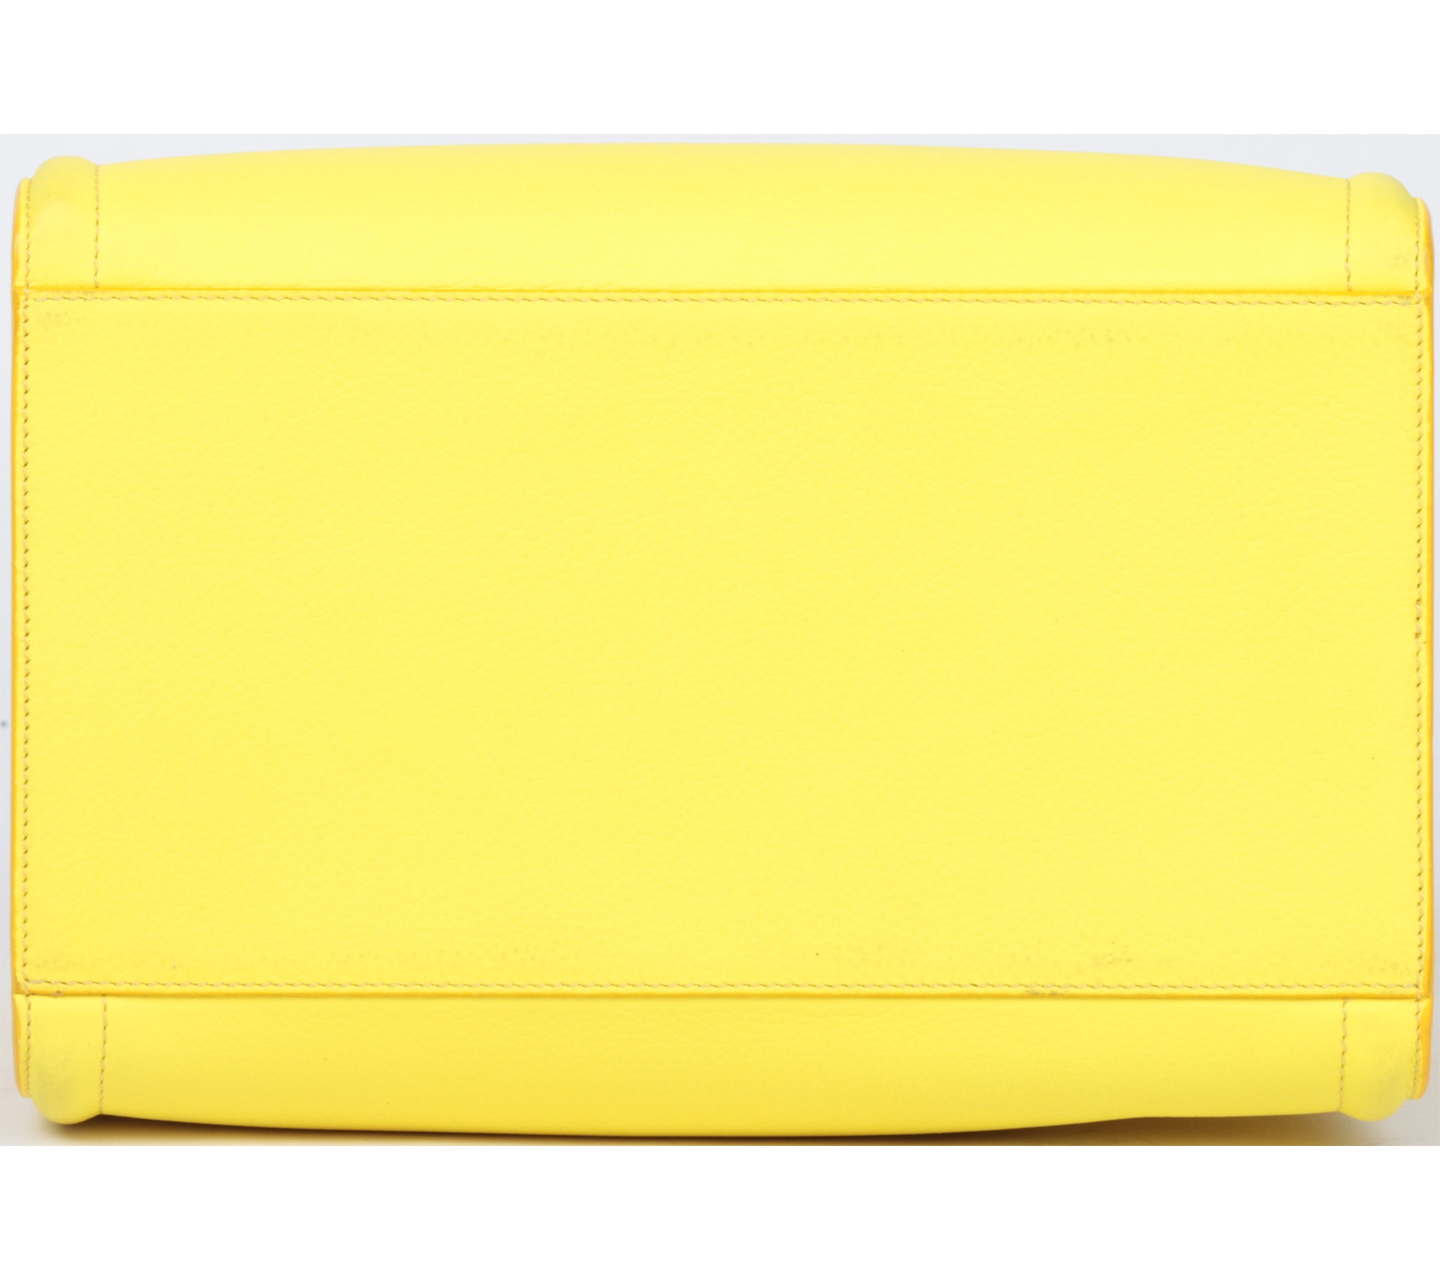 Victoria Beckham Yellow Handbag